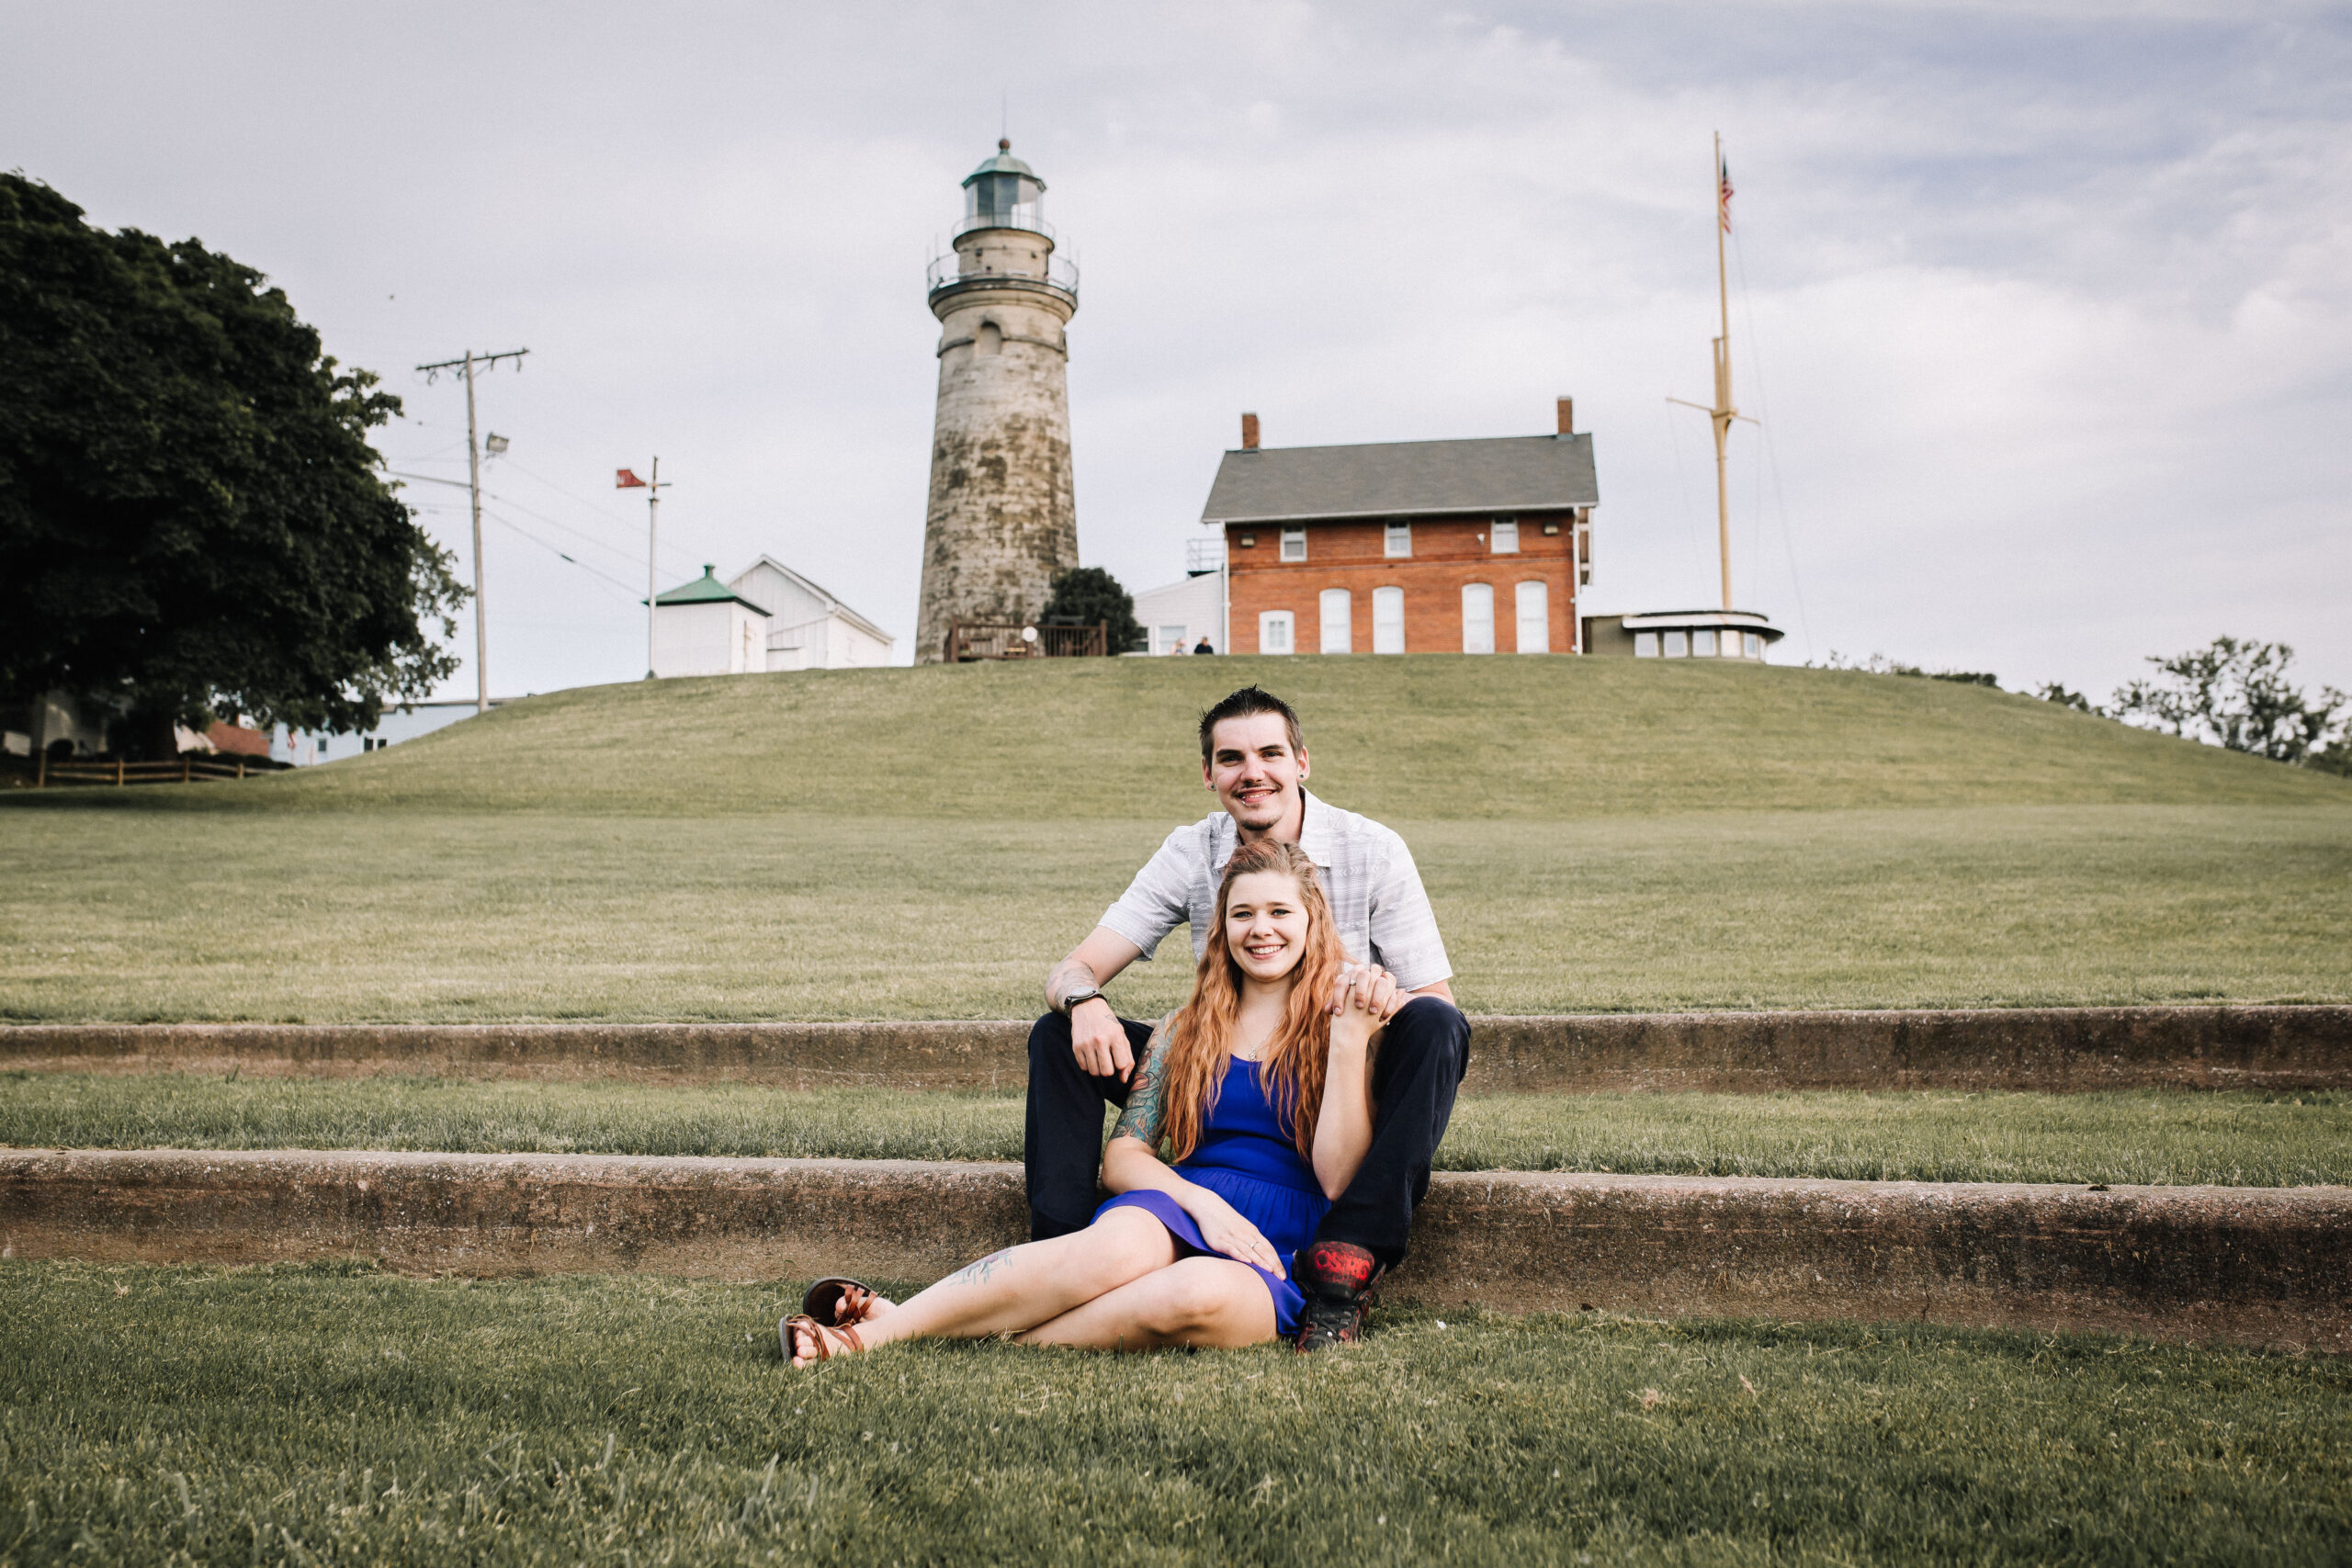 Northeast Ohio Wedding Photographer - Stacy & David's Engagement Session